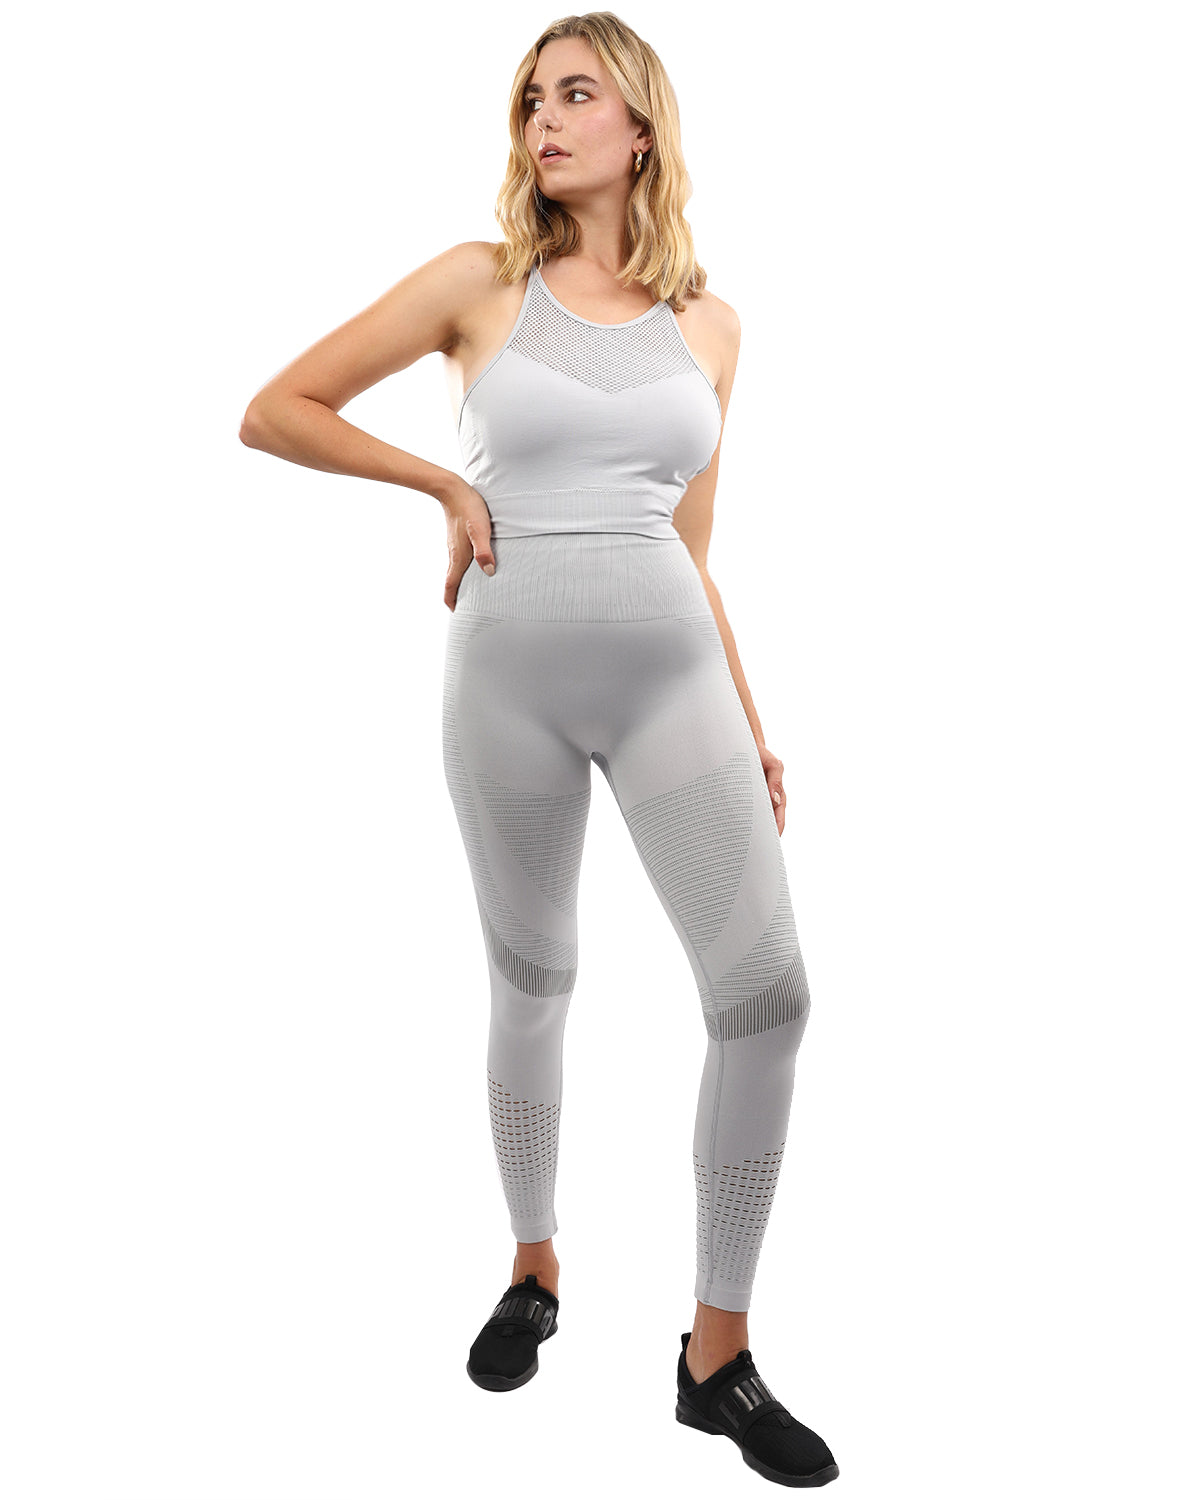 Helia Seamless Leggings & Sports Bra Set - Grey